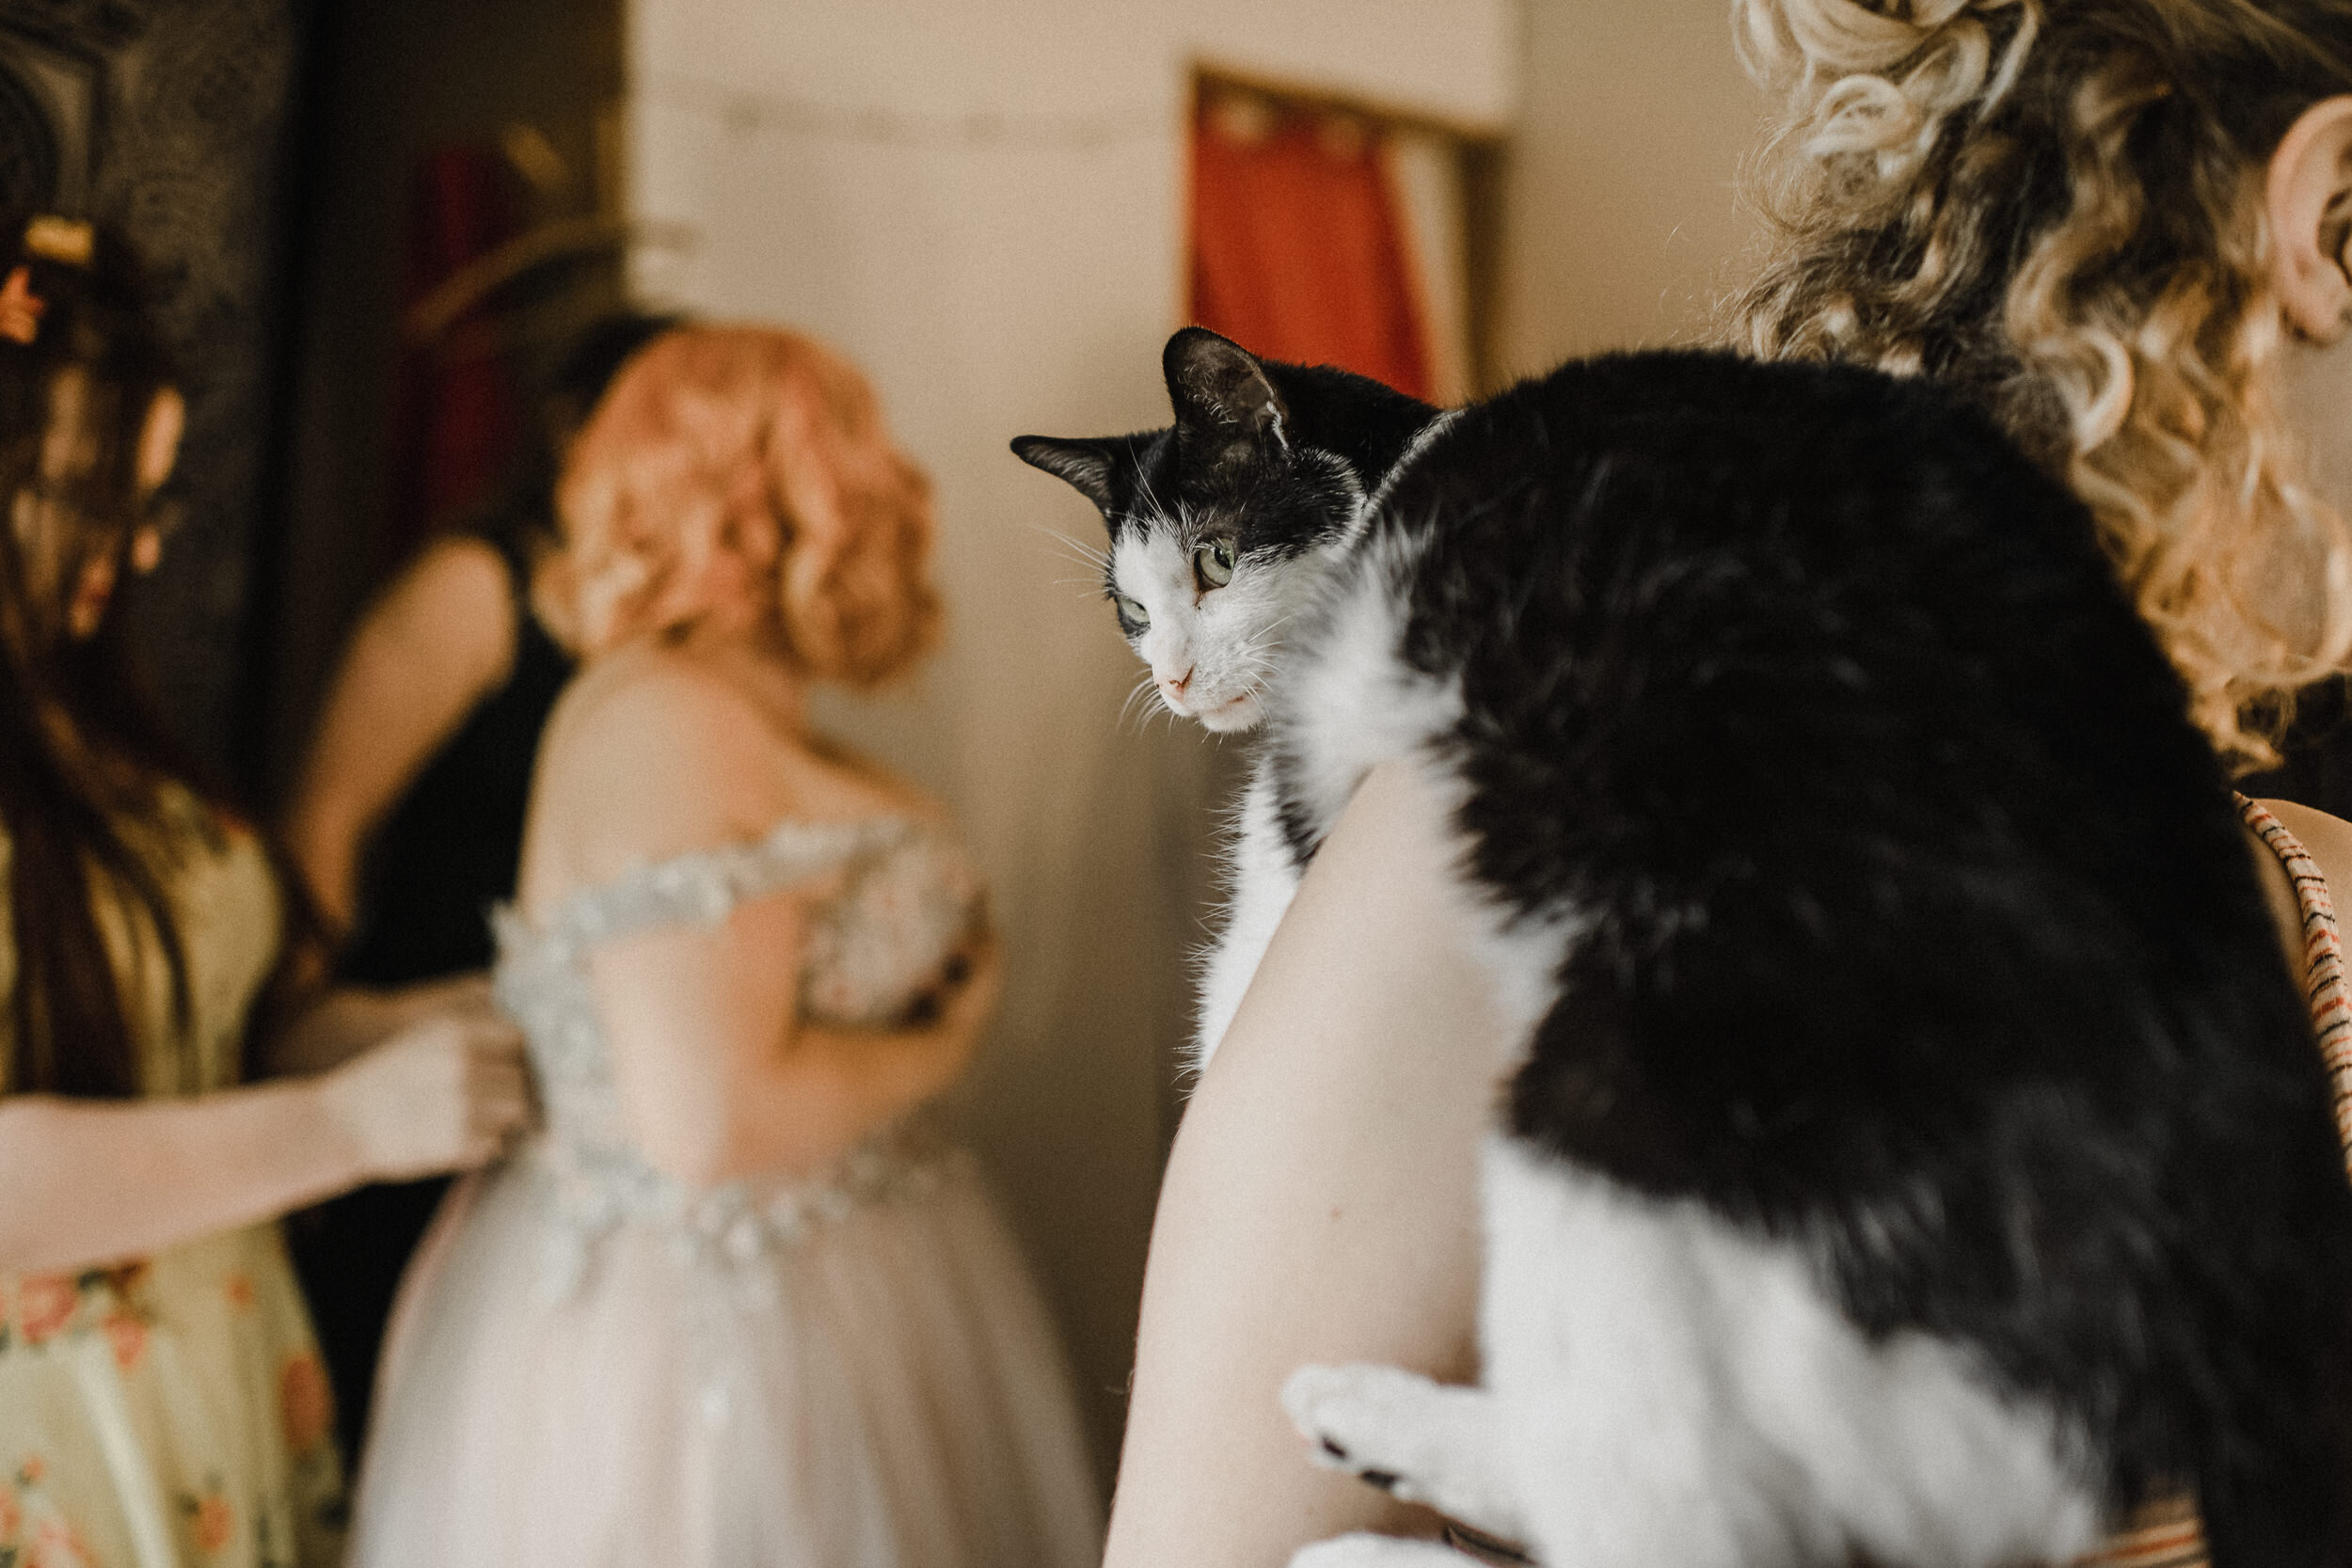 documentary style wedding photography